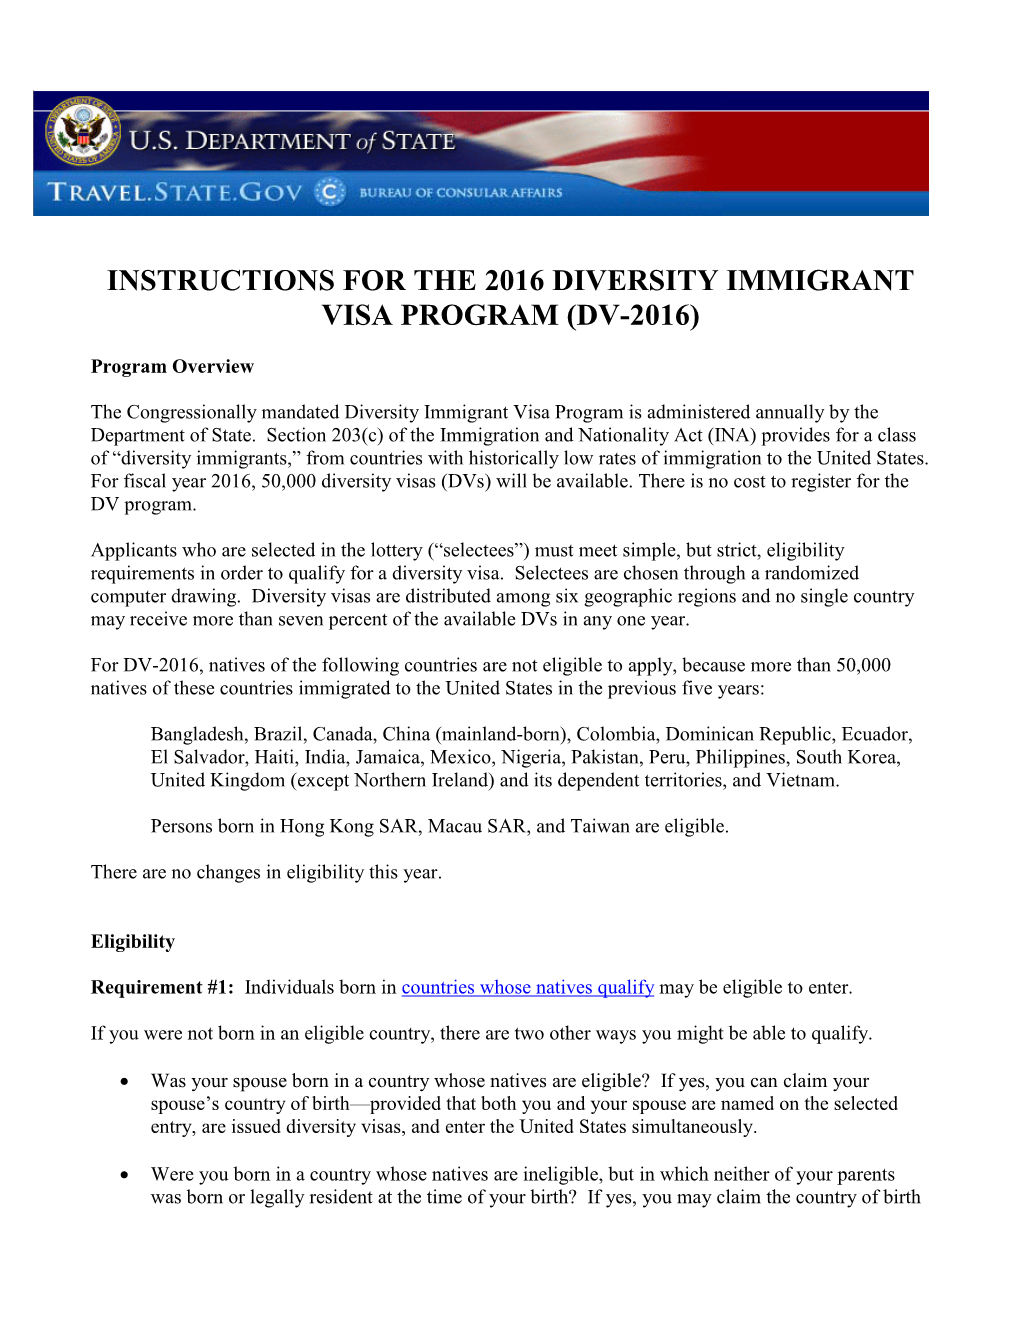 Instructions for the 2016 Diversity Immigrant Visa Program (Dv-2016)